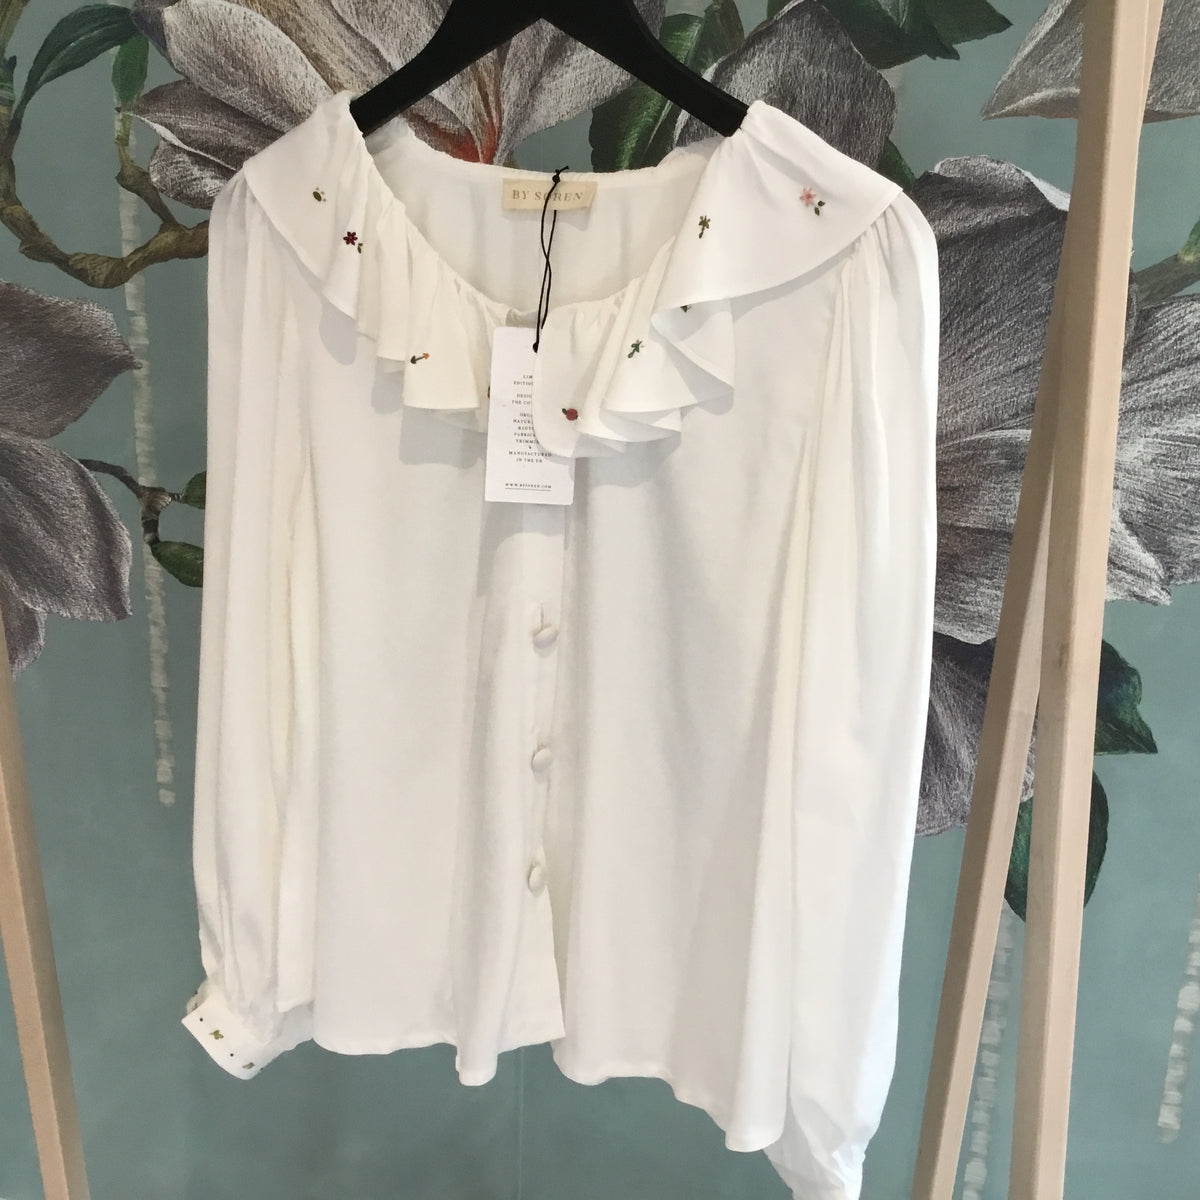 By Soren floral blouse White S/M